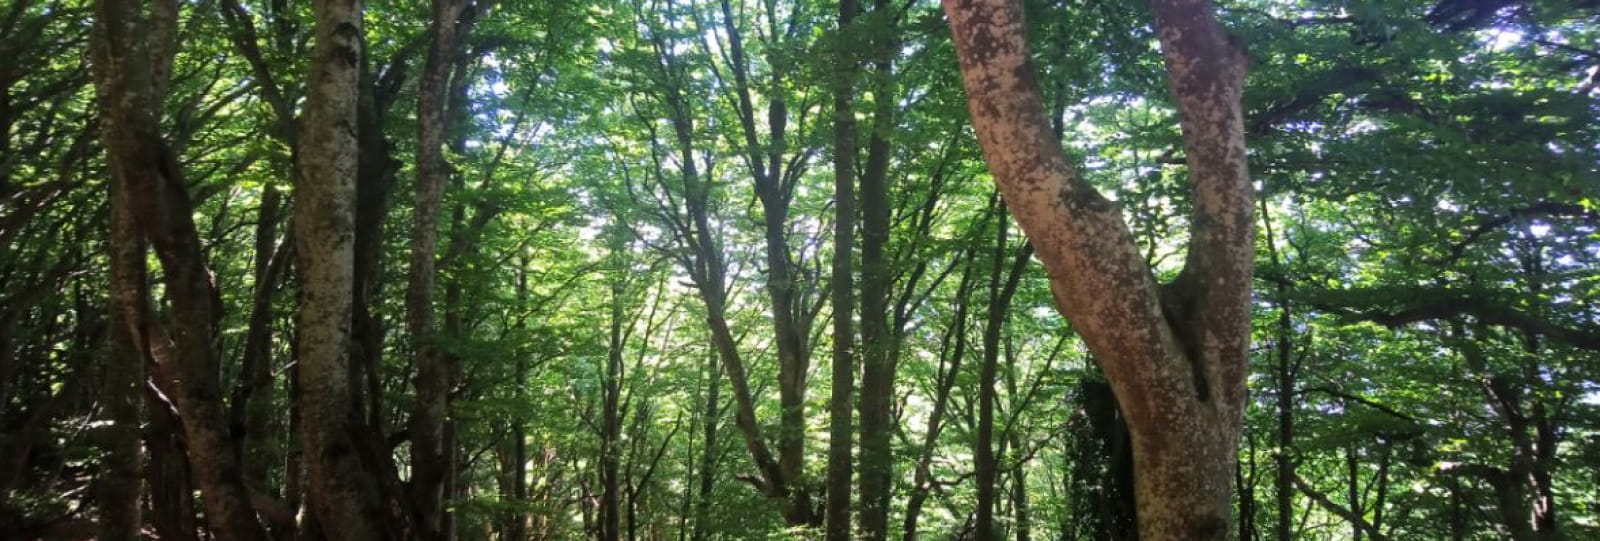 Bains de forêt ou Shinrin-yoku